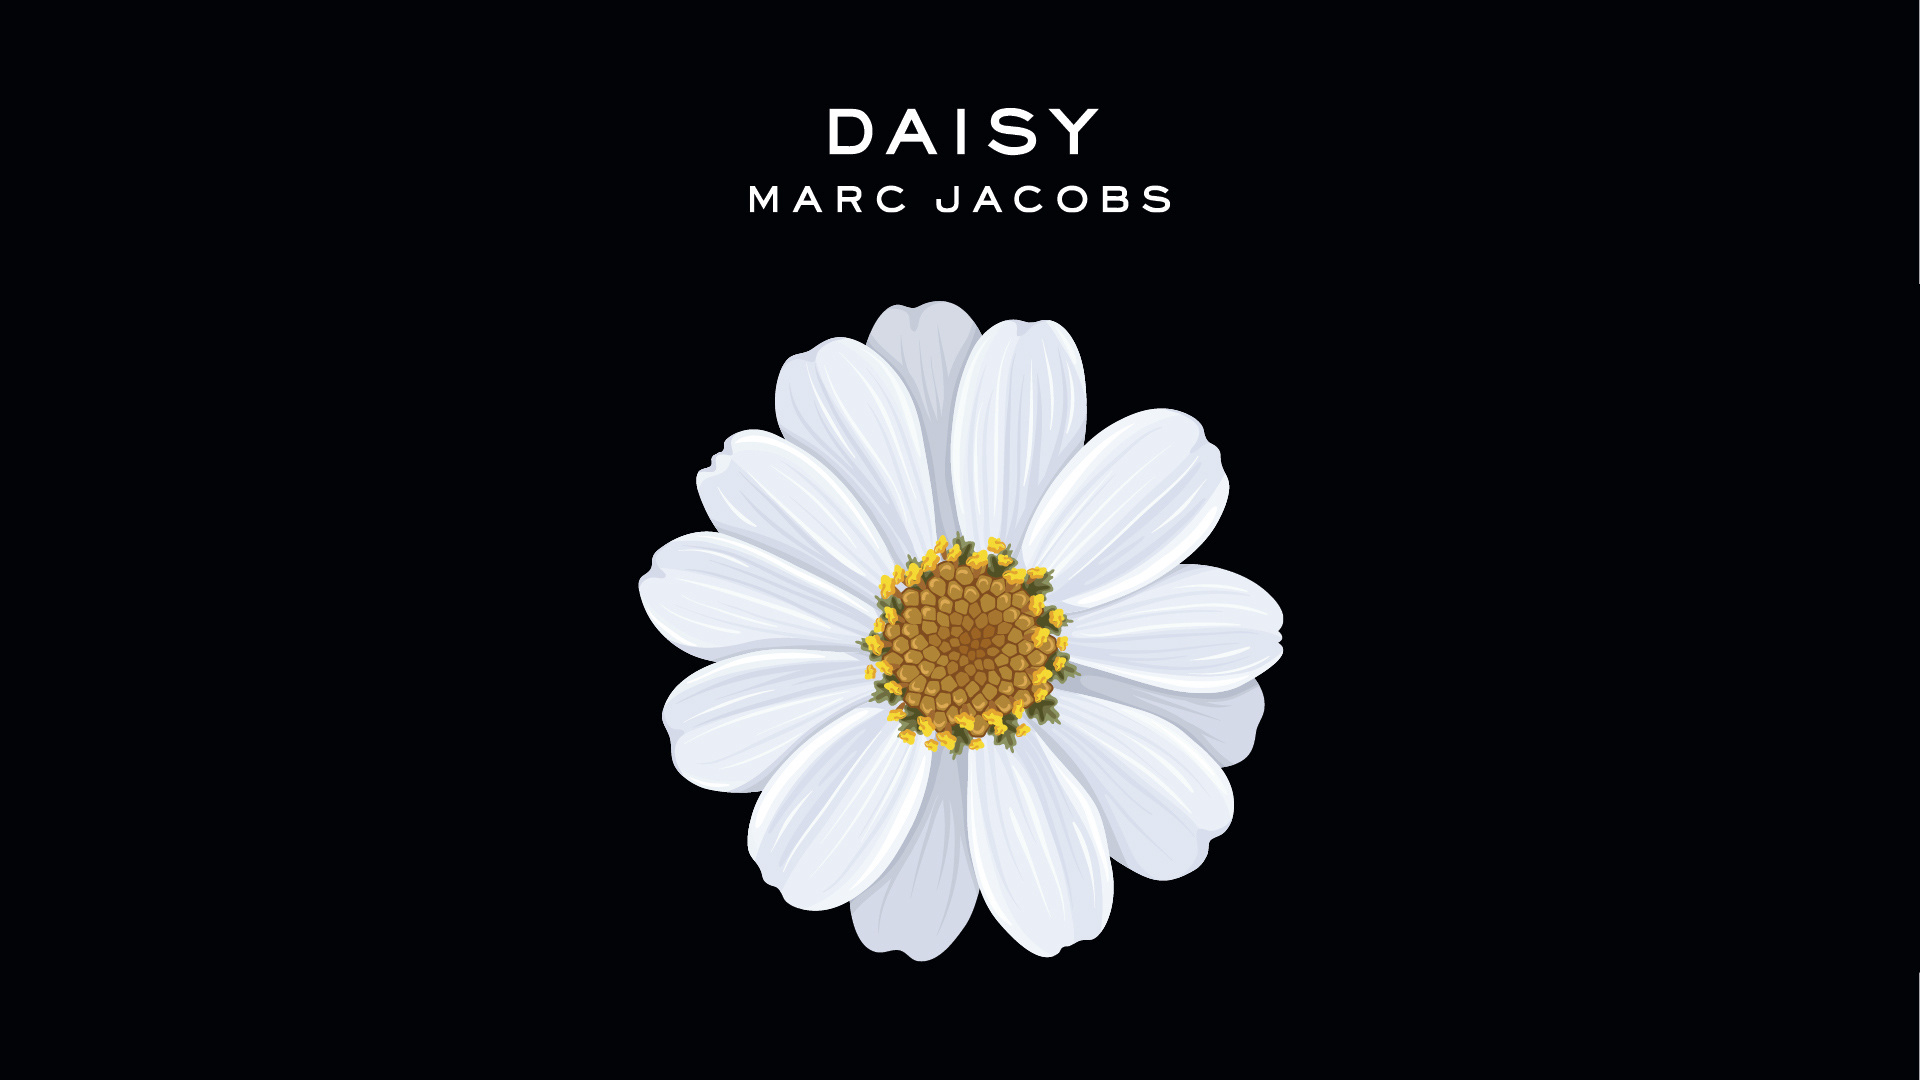 Marc Jacobs, Daisy event, Copenhagen, Fashion industry, 1920x1080 Full HD Desktop